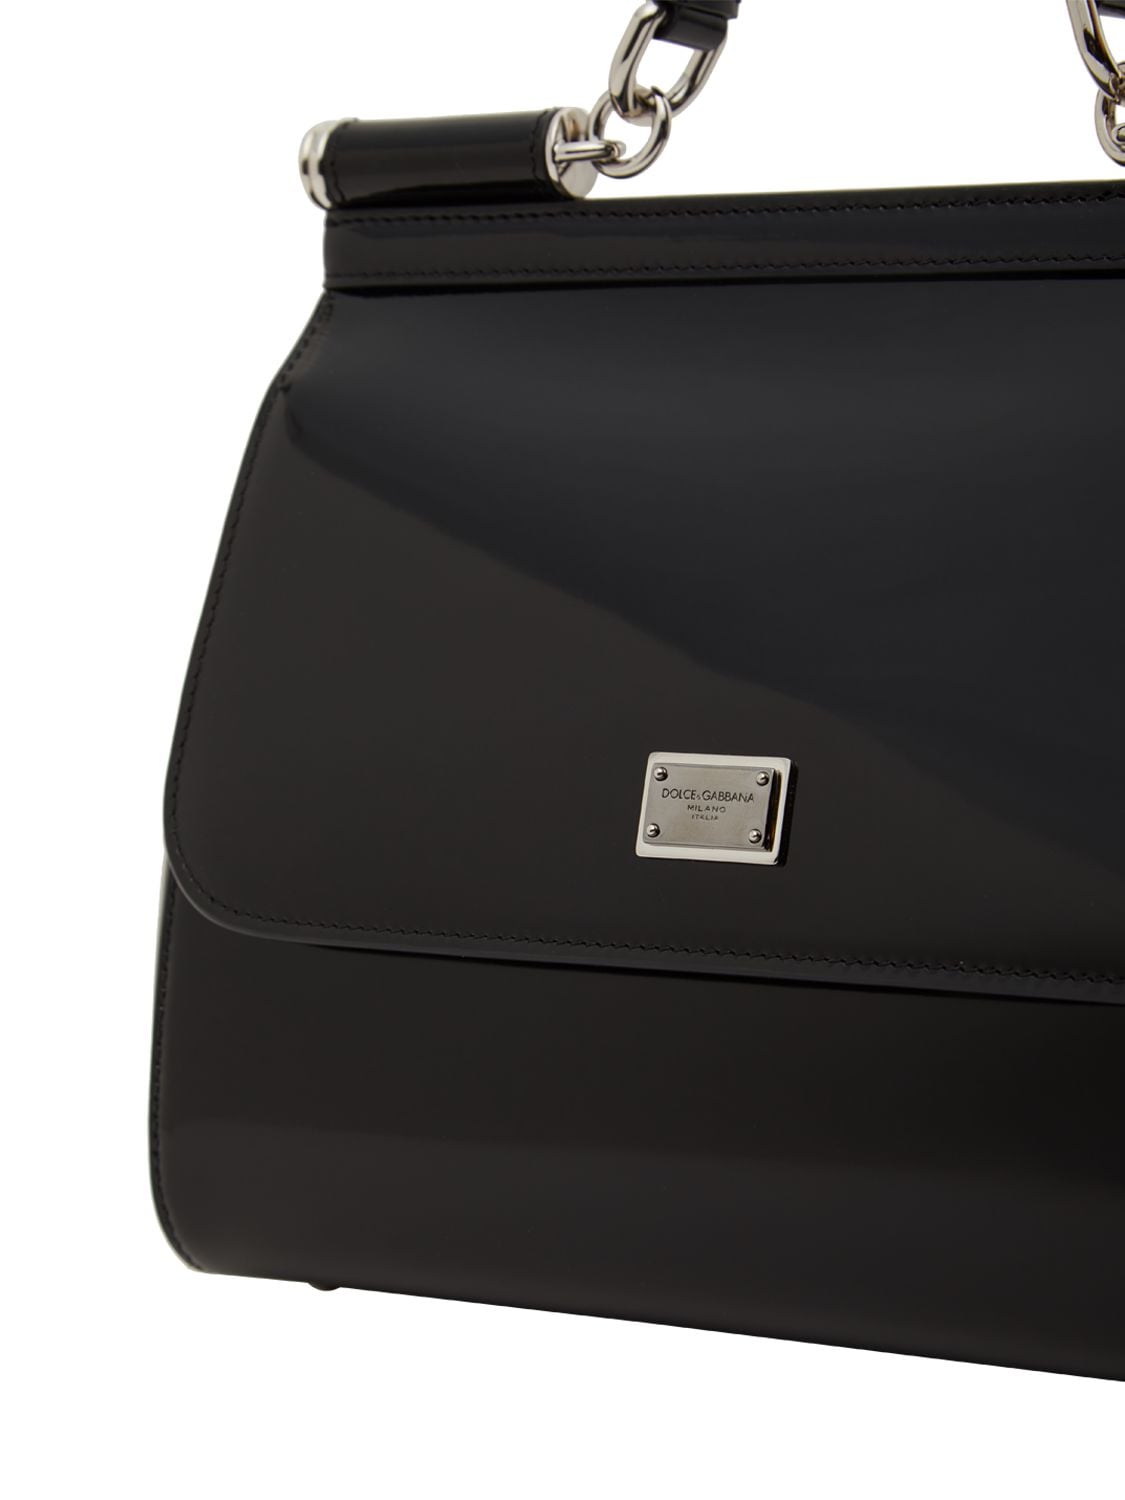 Dolce & Gabbana Medium Sicily Top-handle Bag In Black